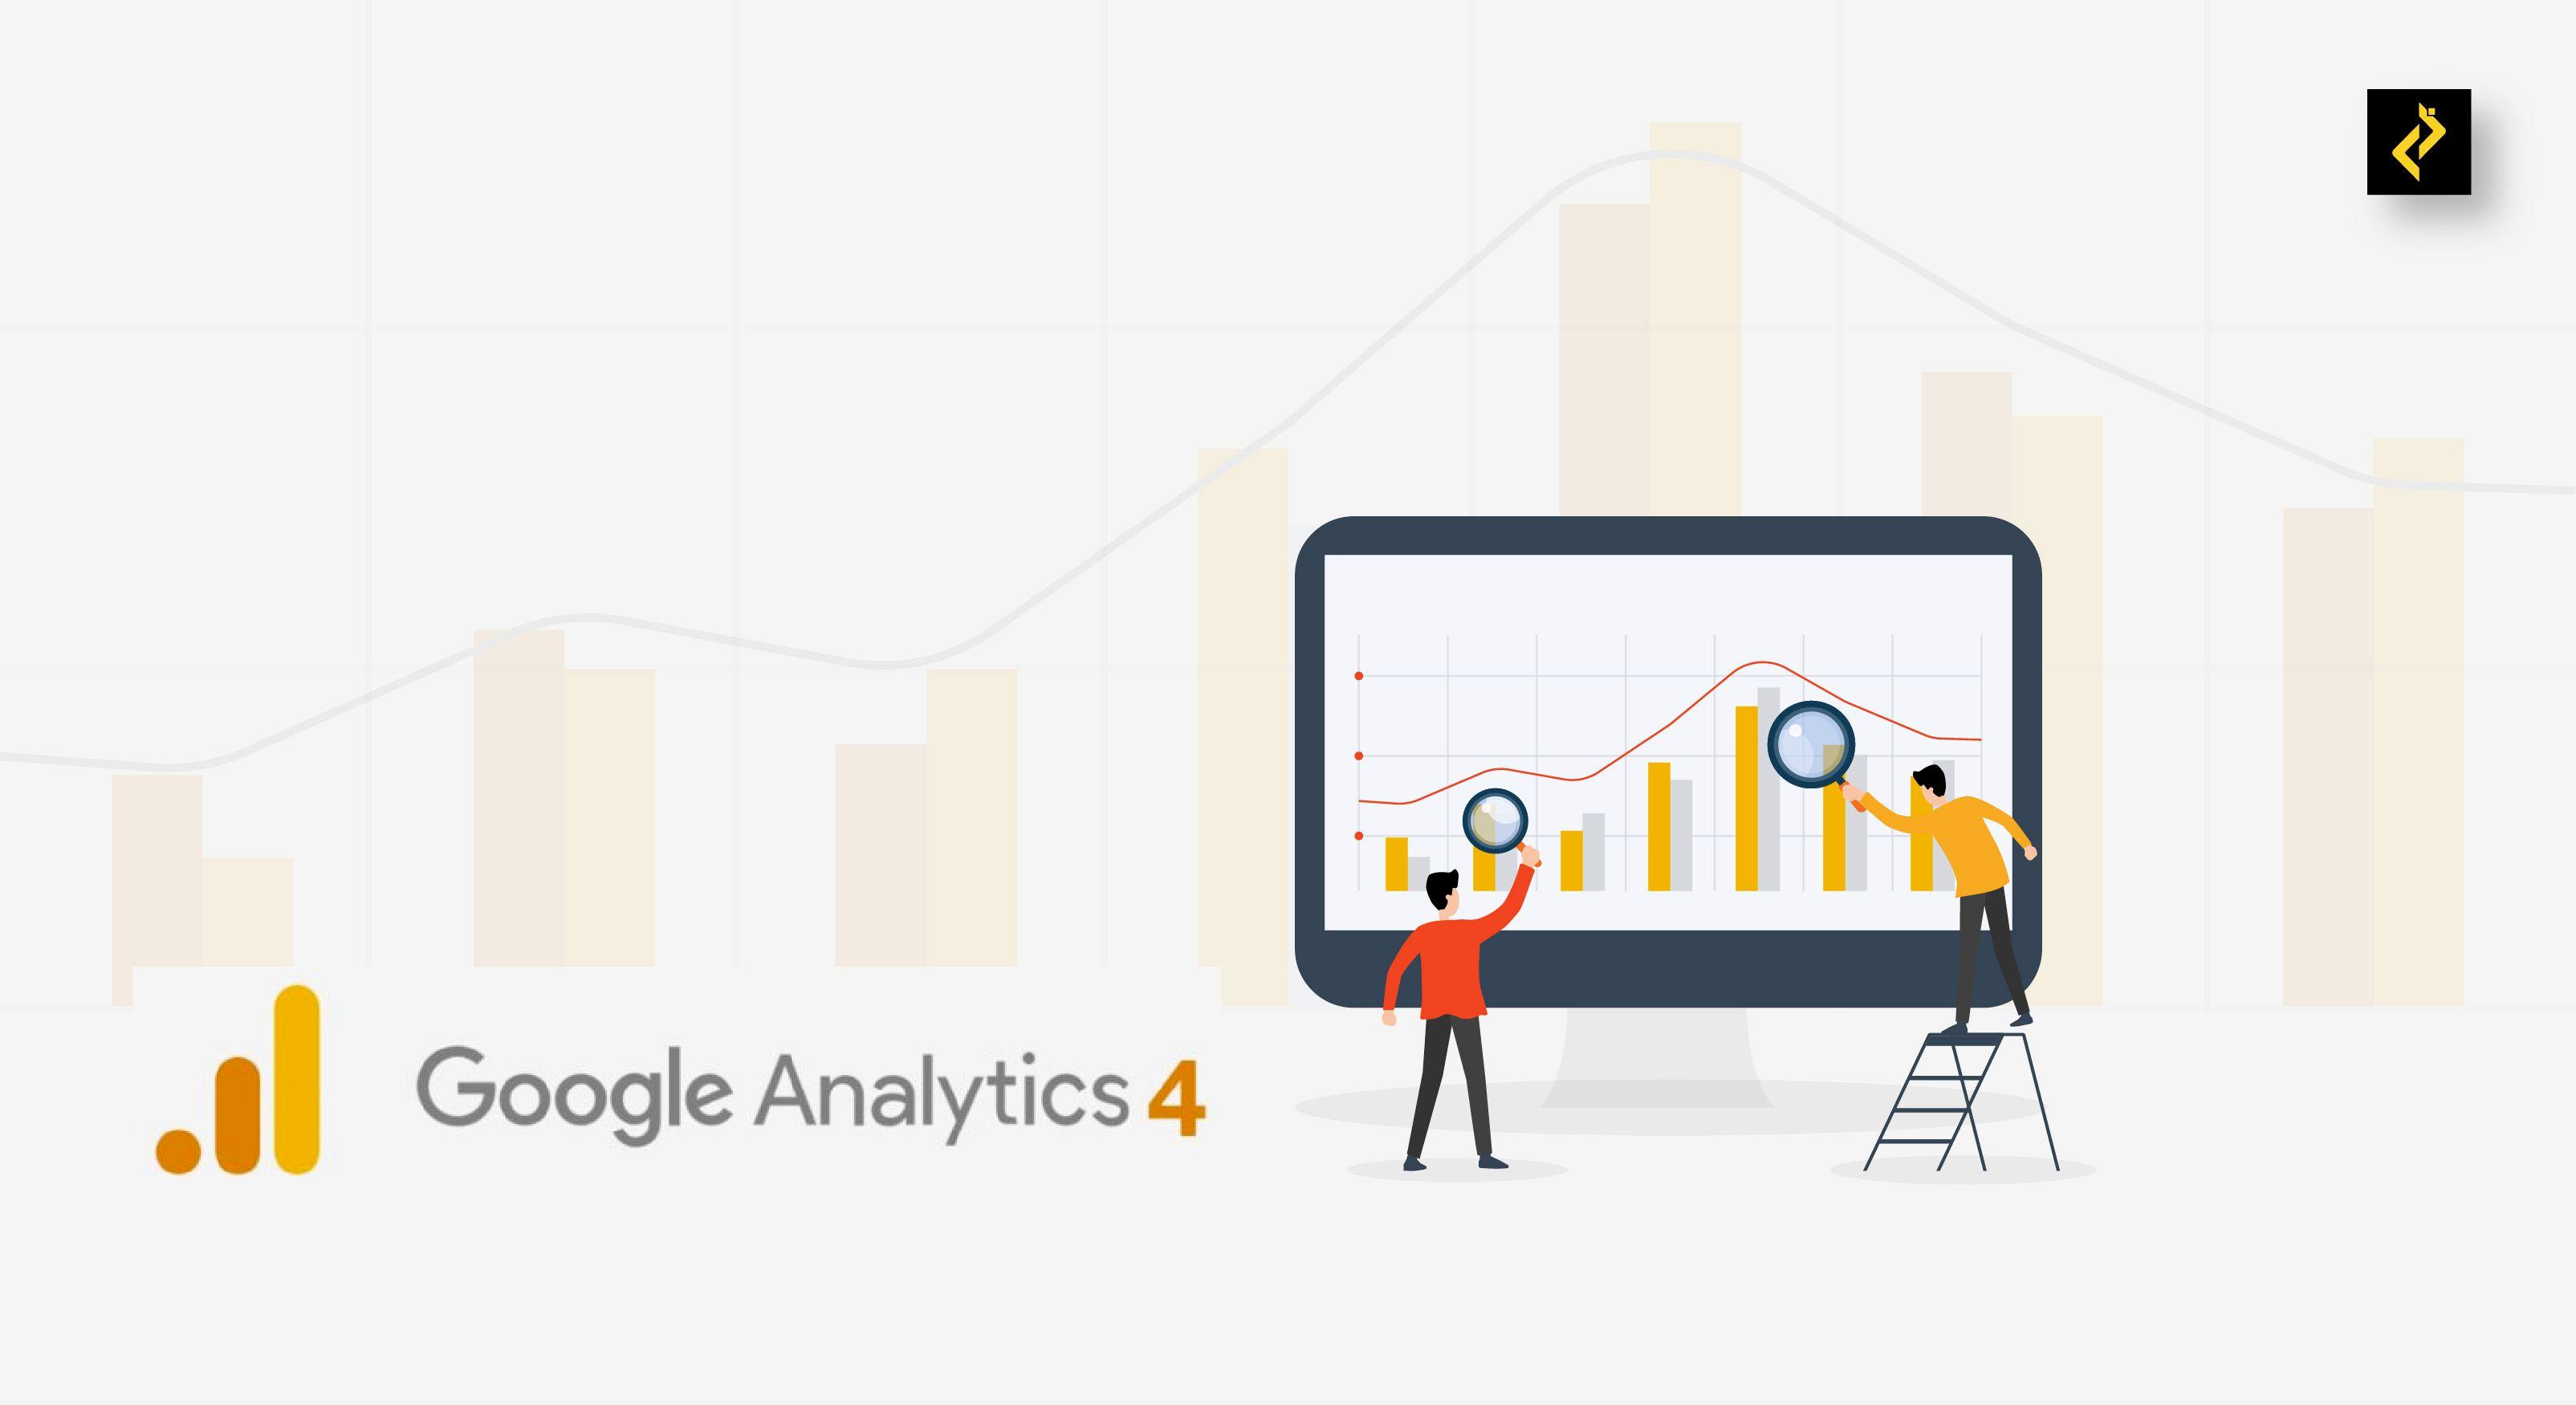 Features of Google Analytics 4